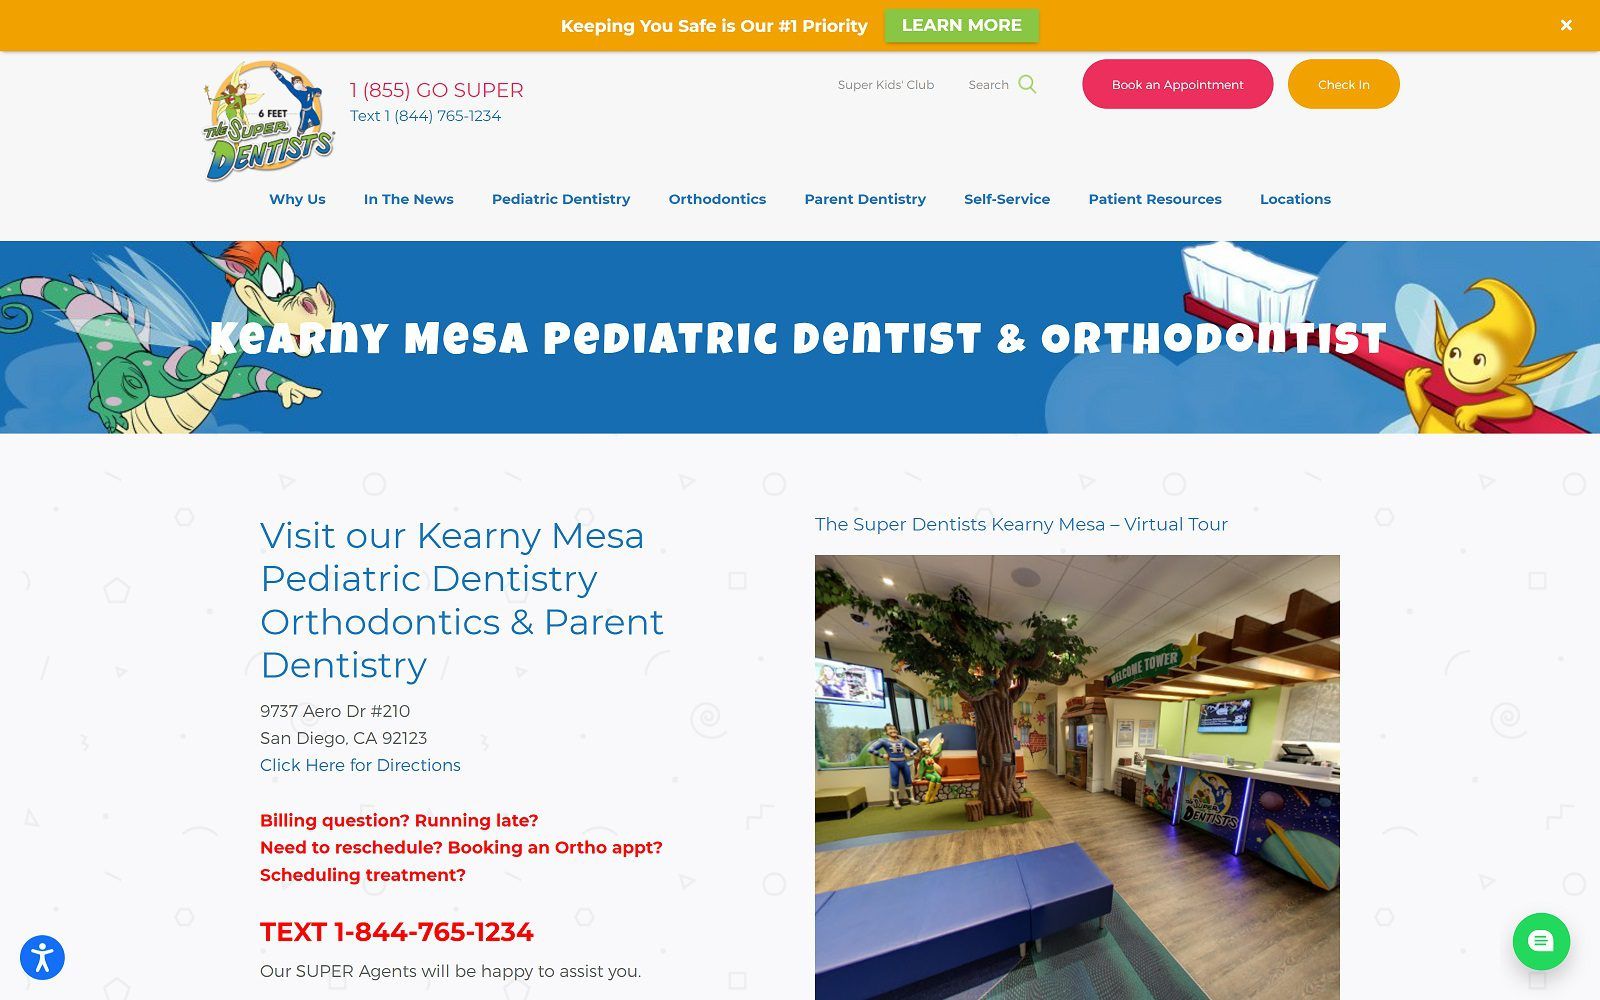 The screenshot of the super dentists website